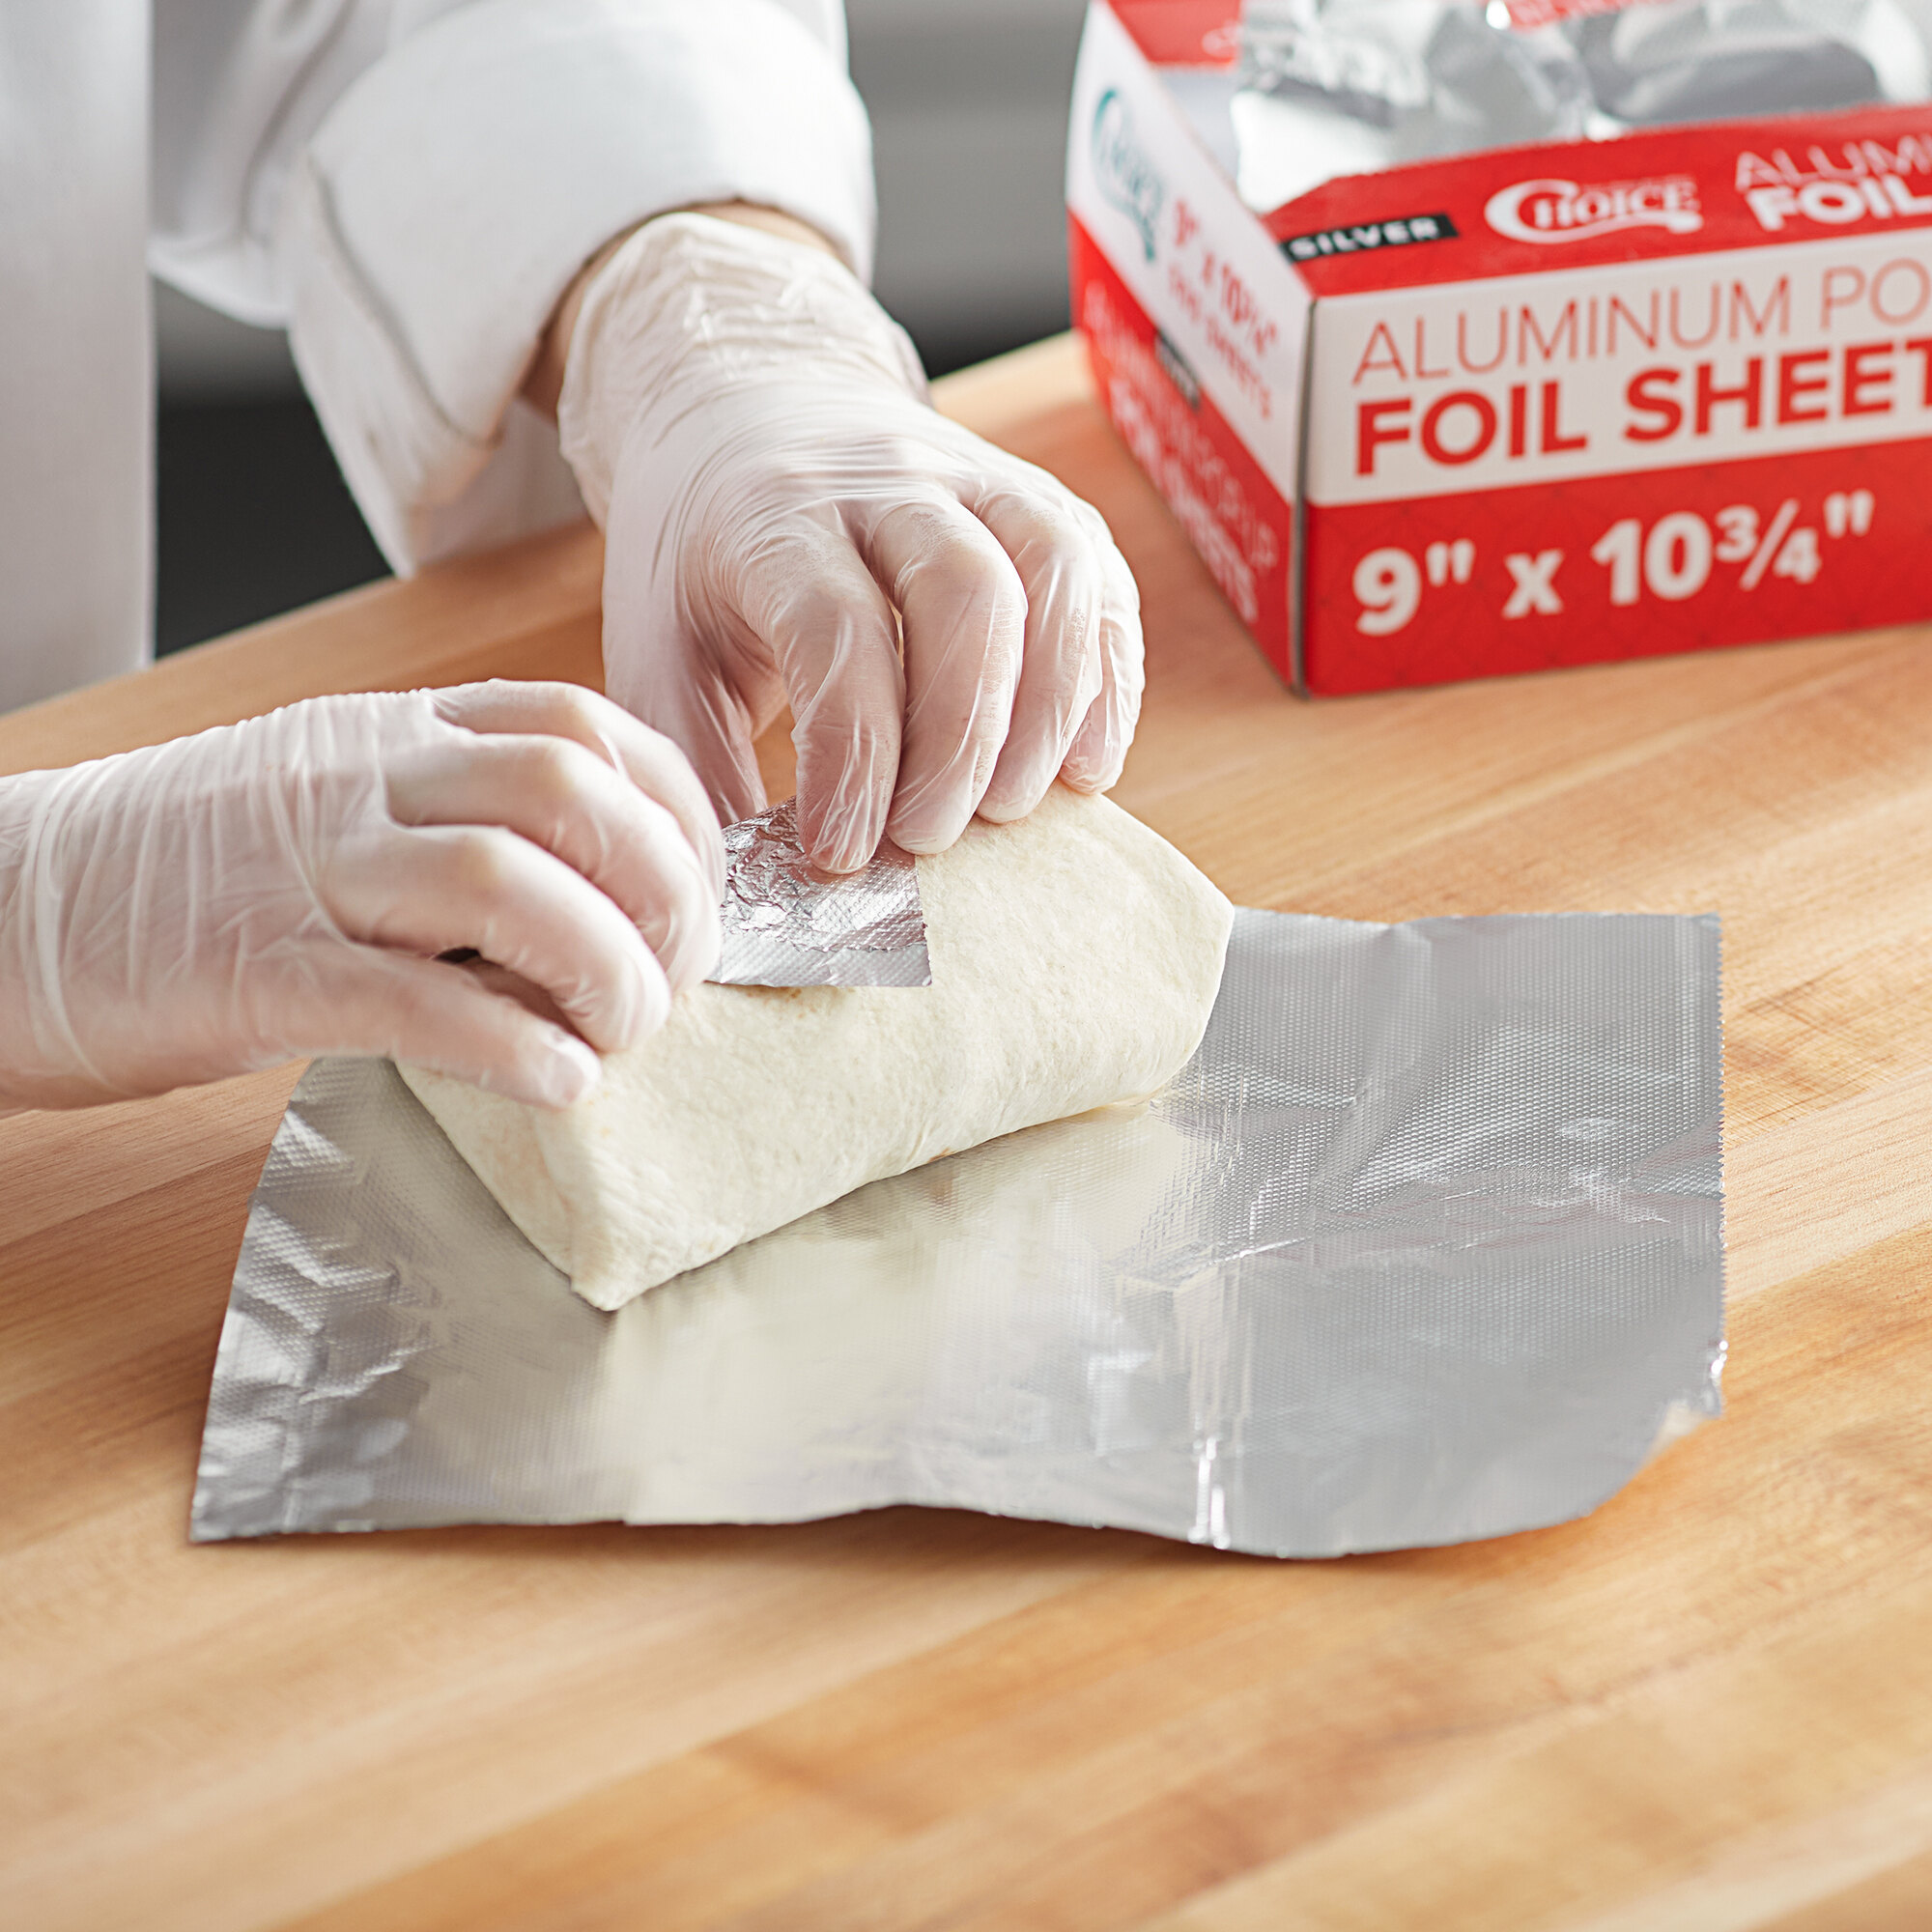 Food Aluminum Foil Grill Sheets , Pop Up Foil Sheets Customizable Width